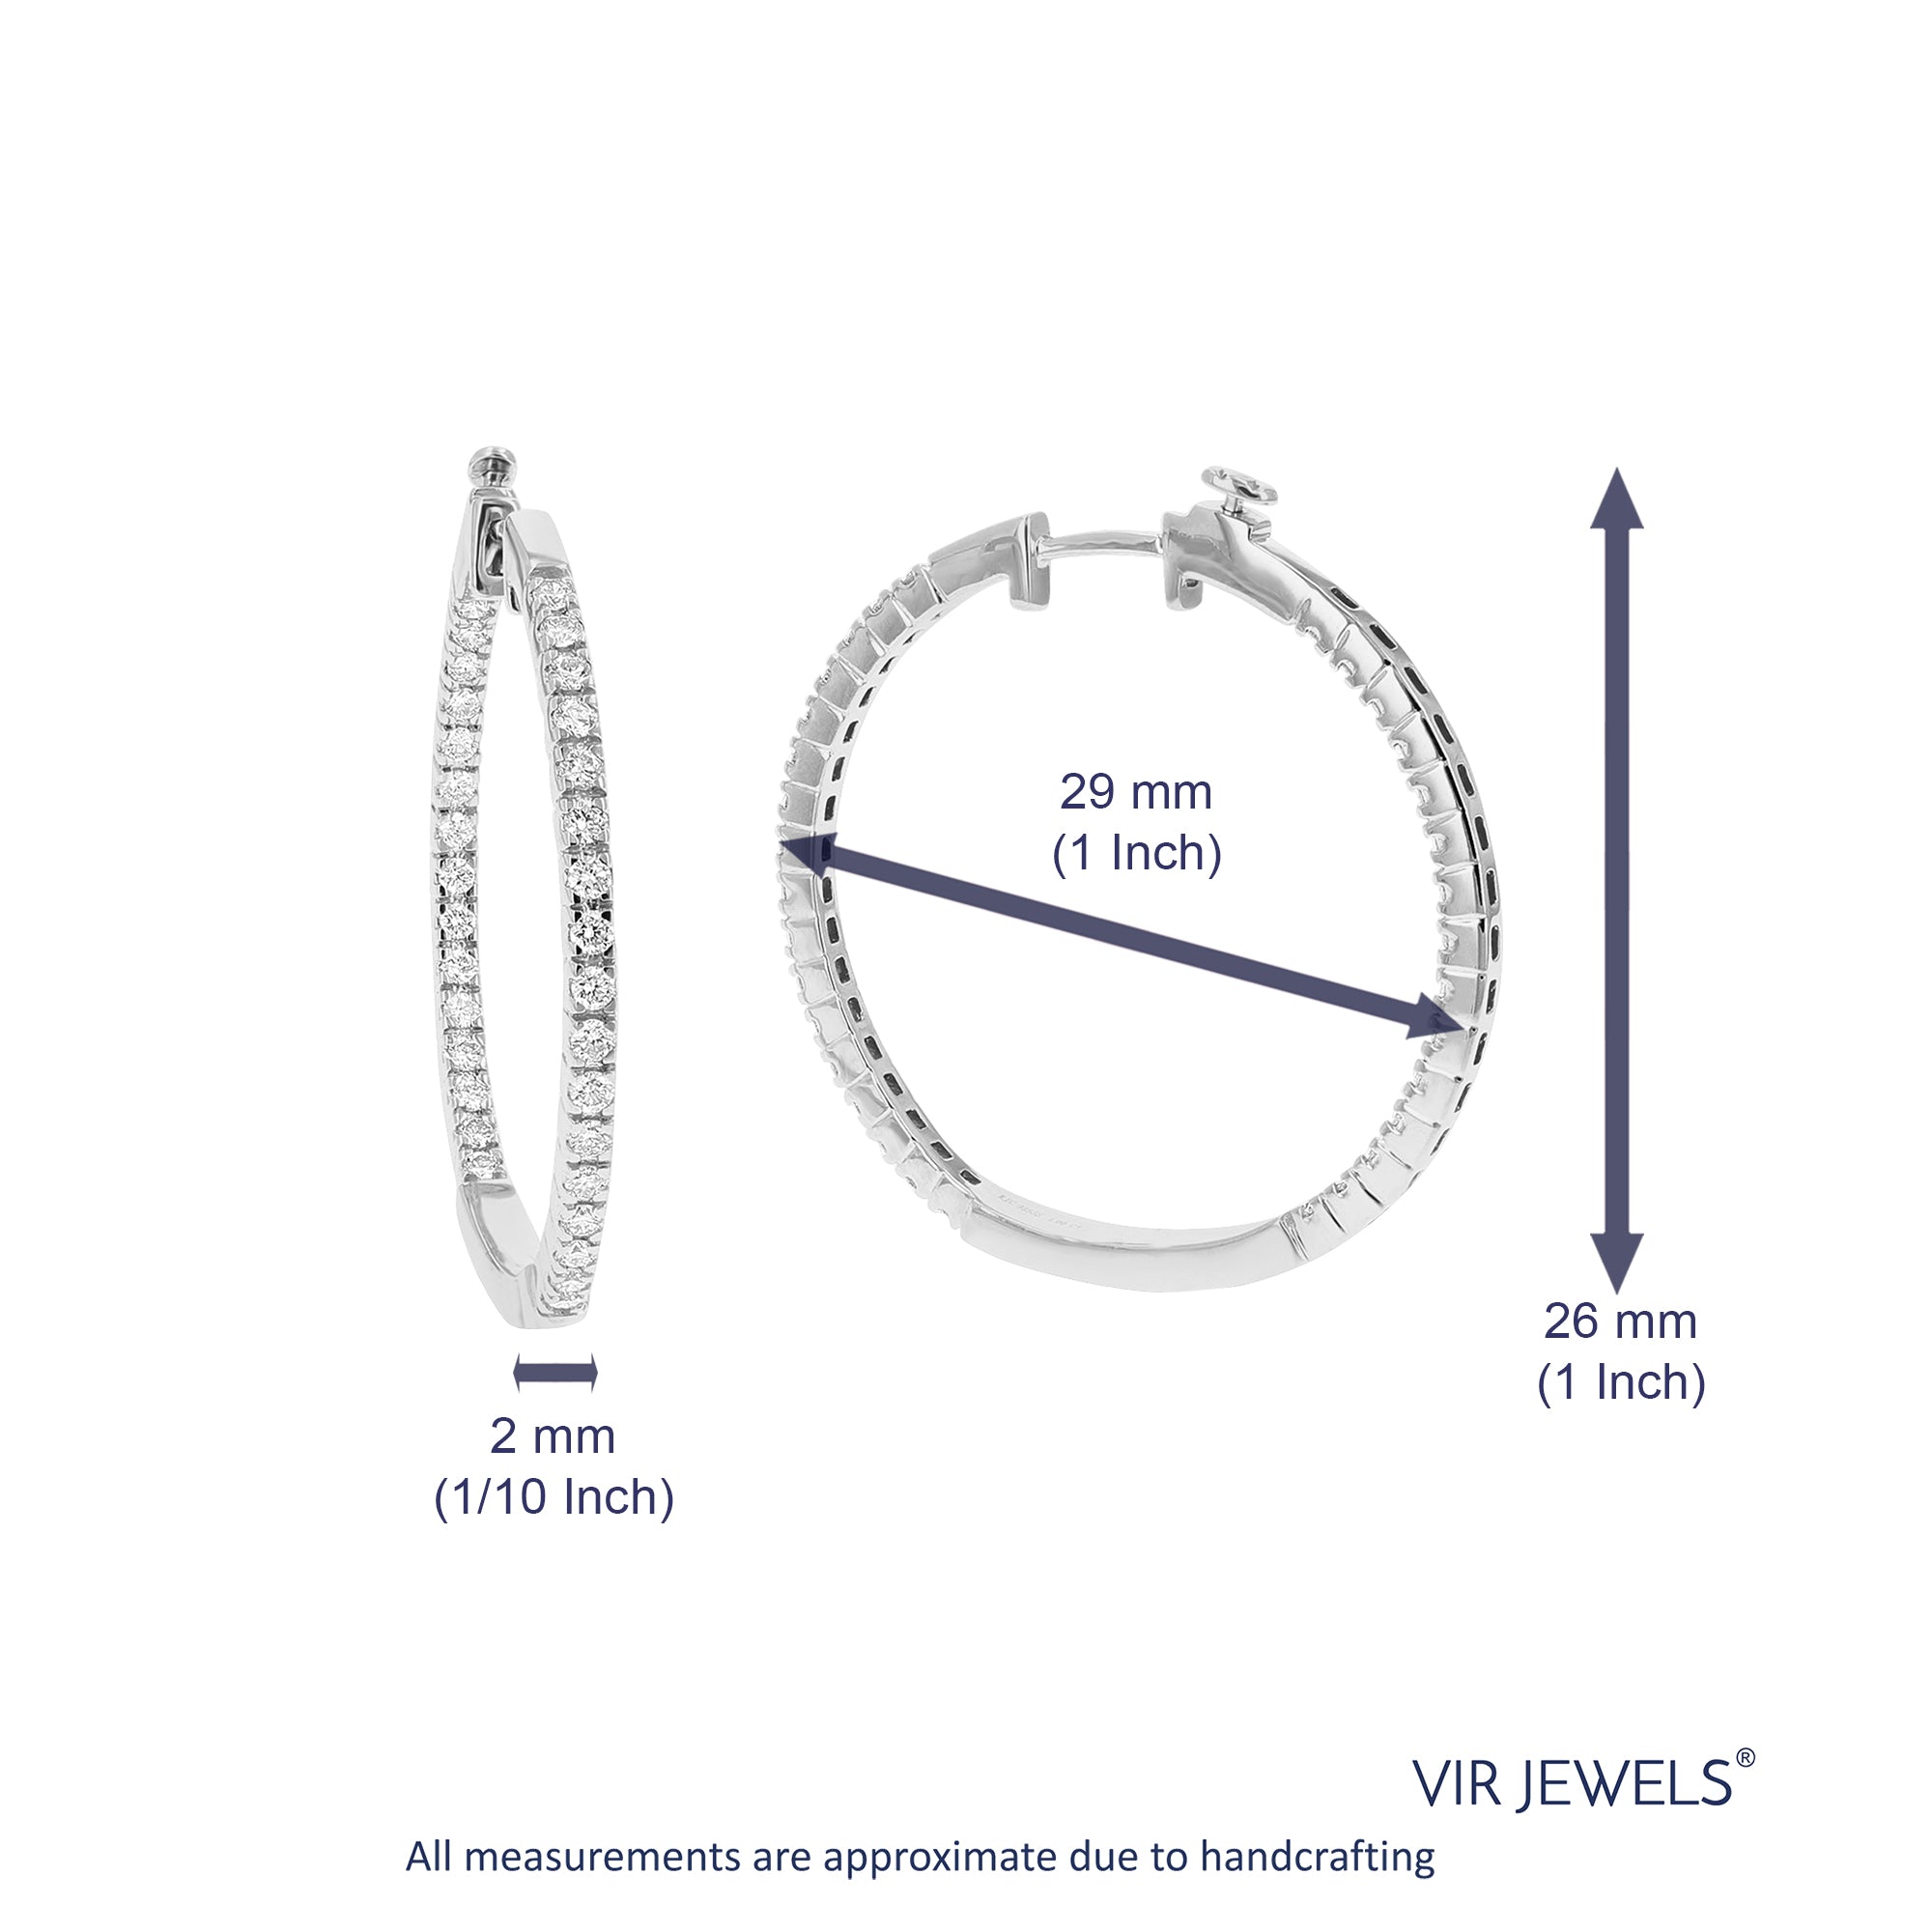 1 cttw Diamond Hoop Earrings for Women, Round Lab Grown Diamond Earrings in .925 Sterling Silver, Prong Setting, 1 Inch